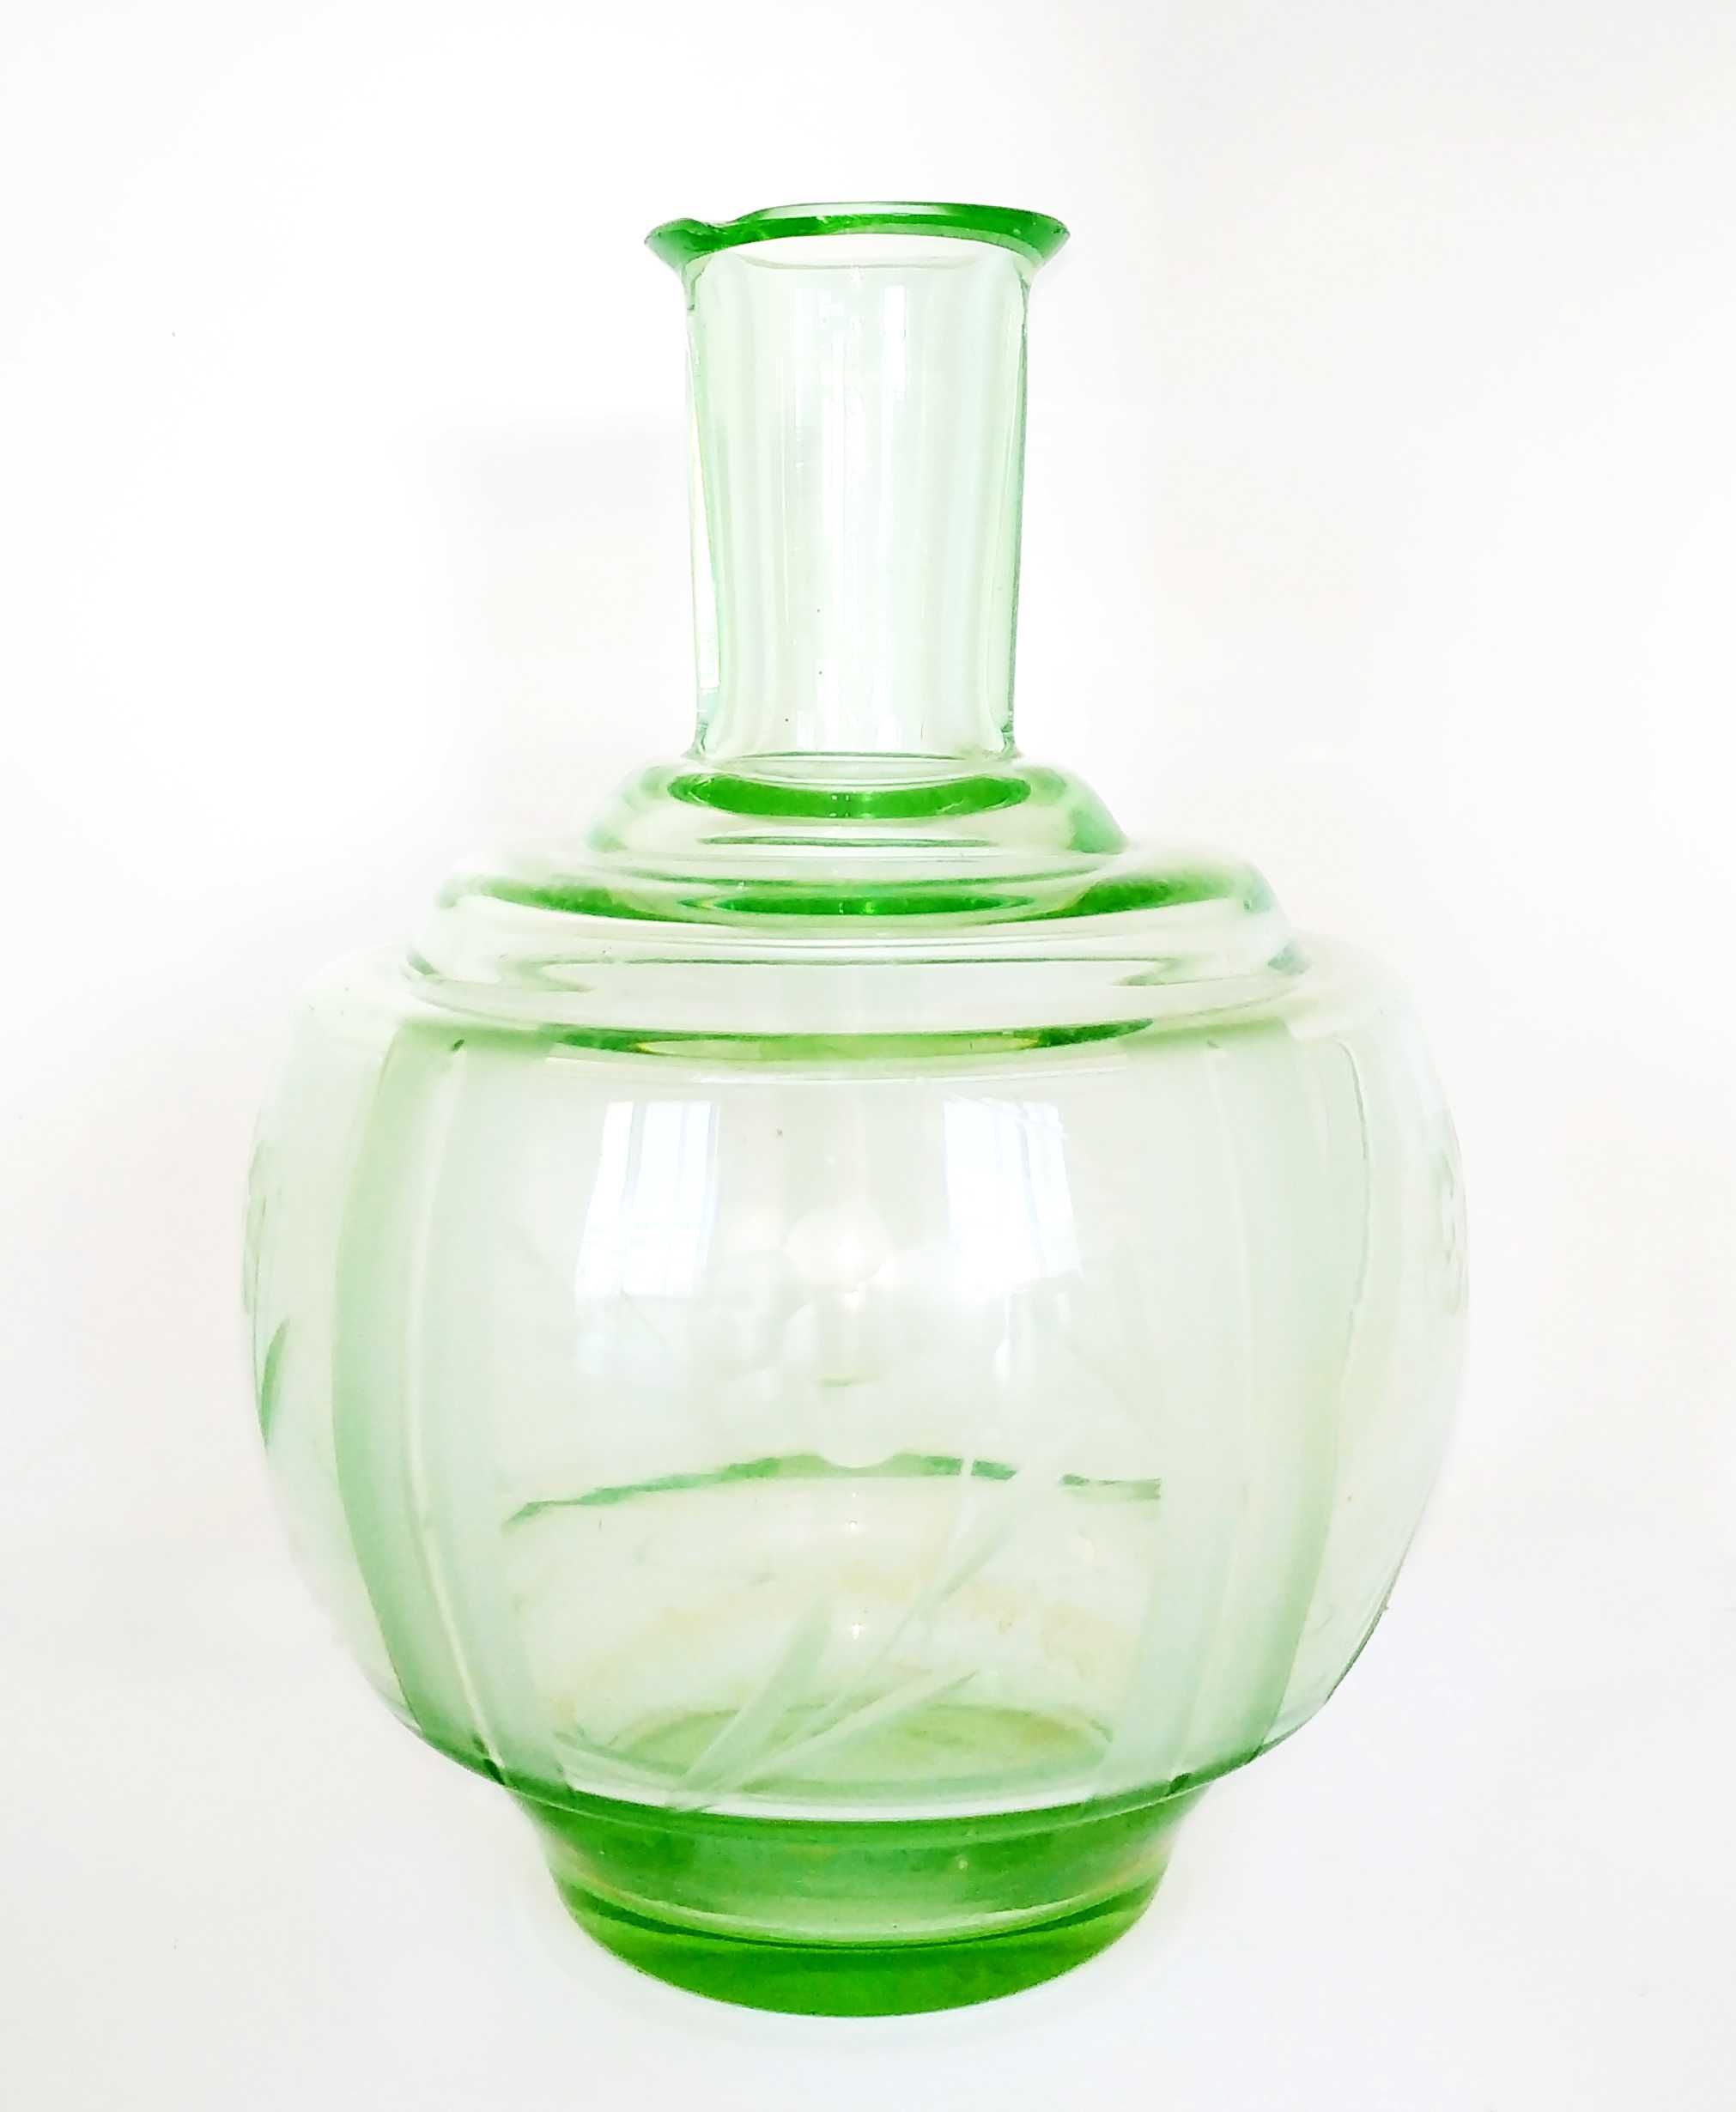 Jarra verde em vidro